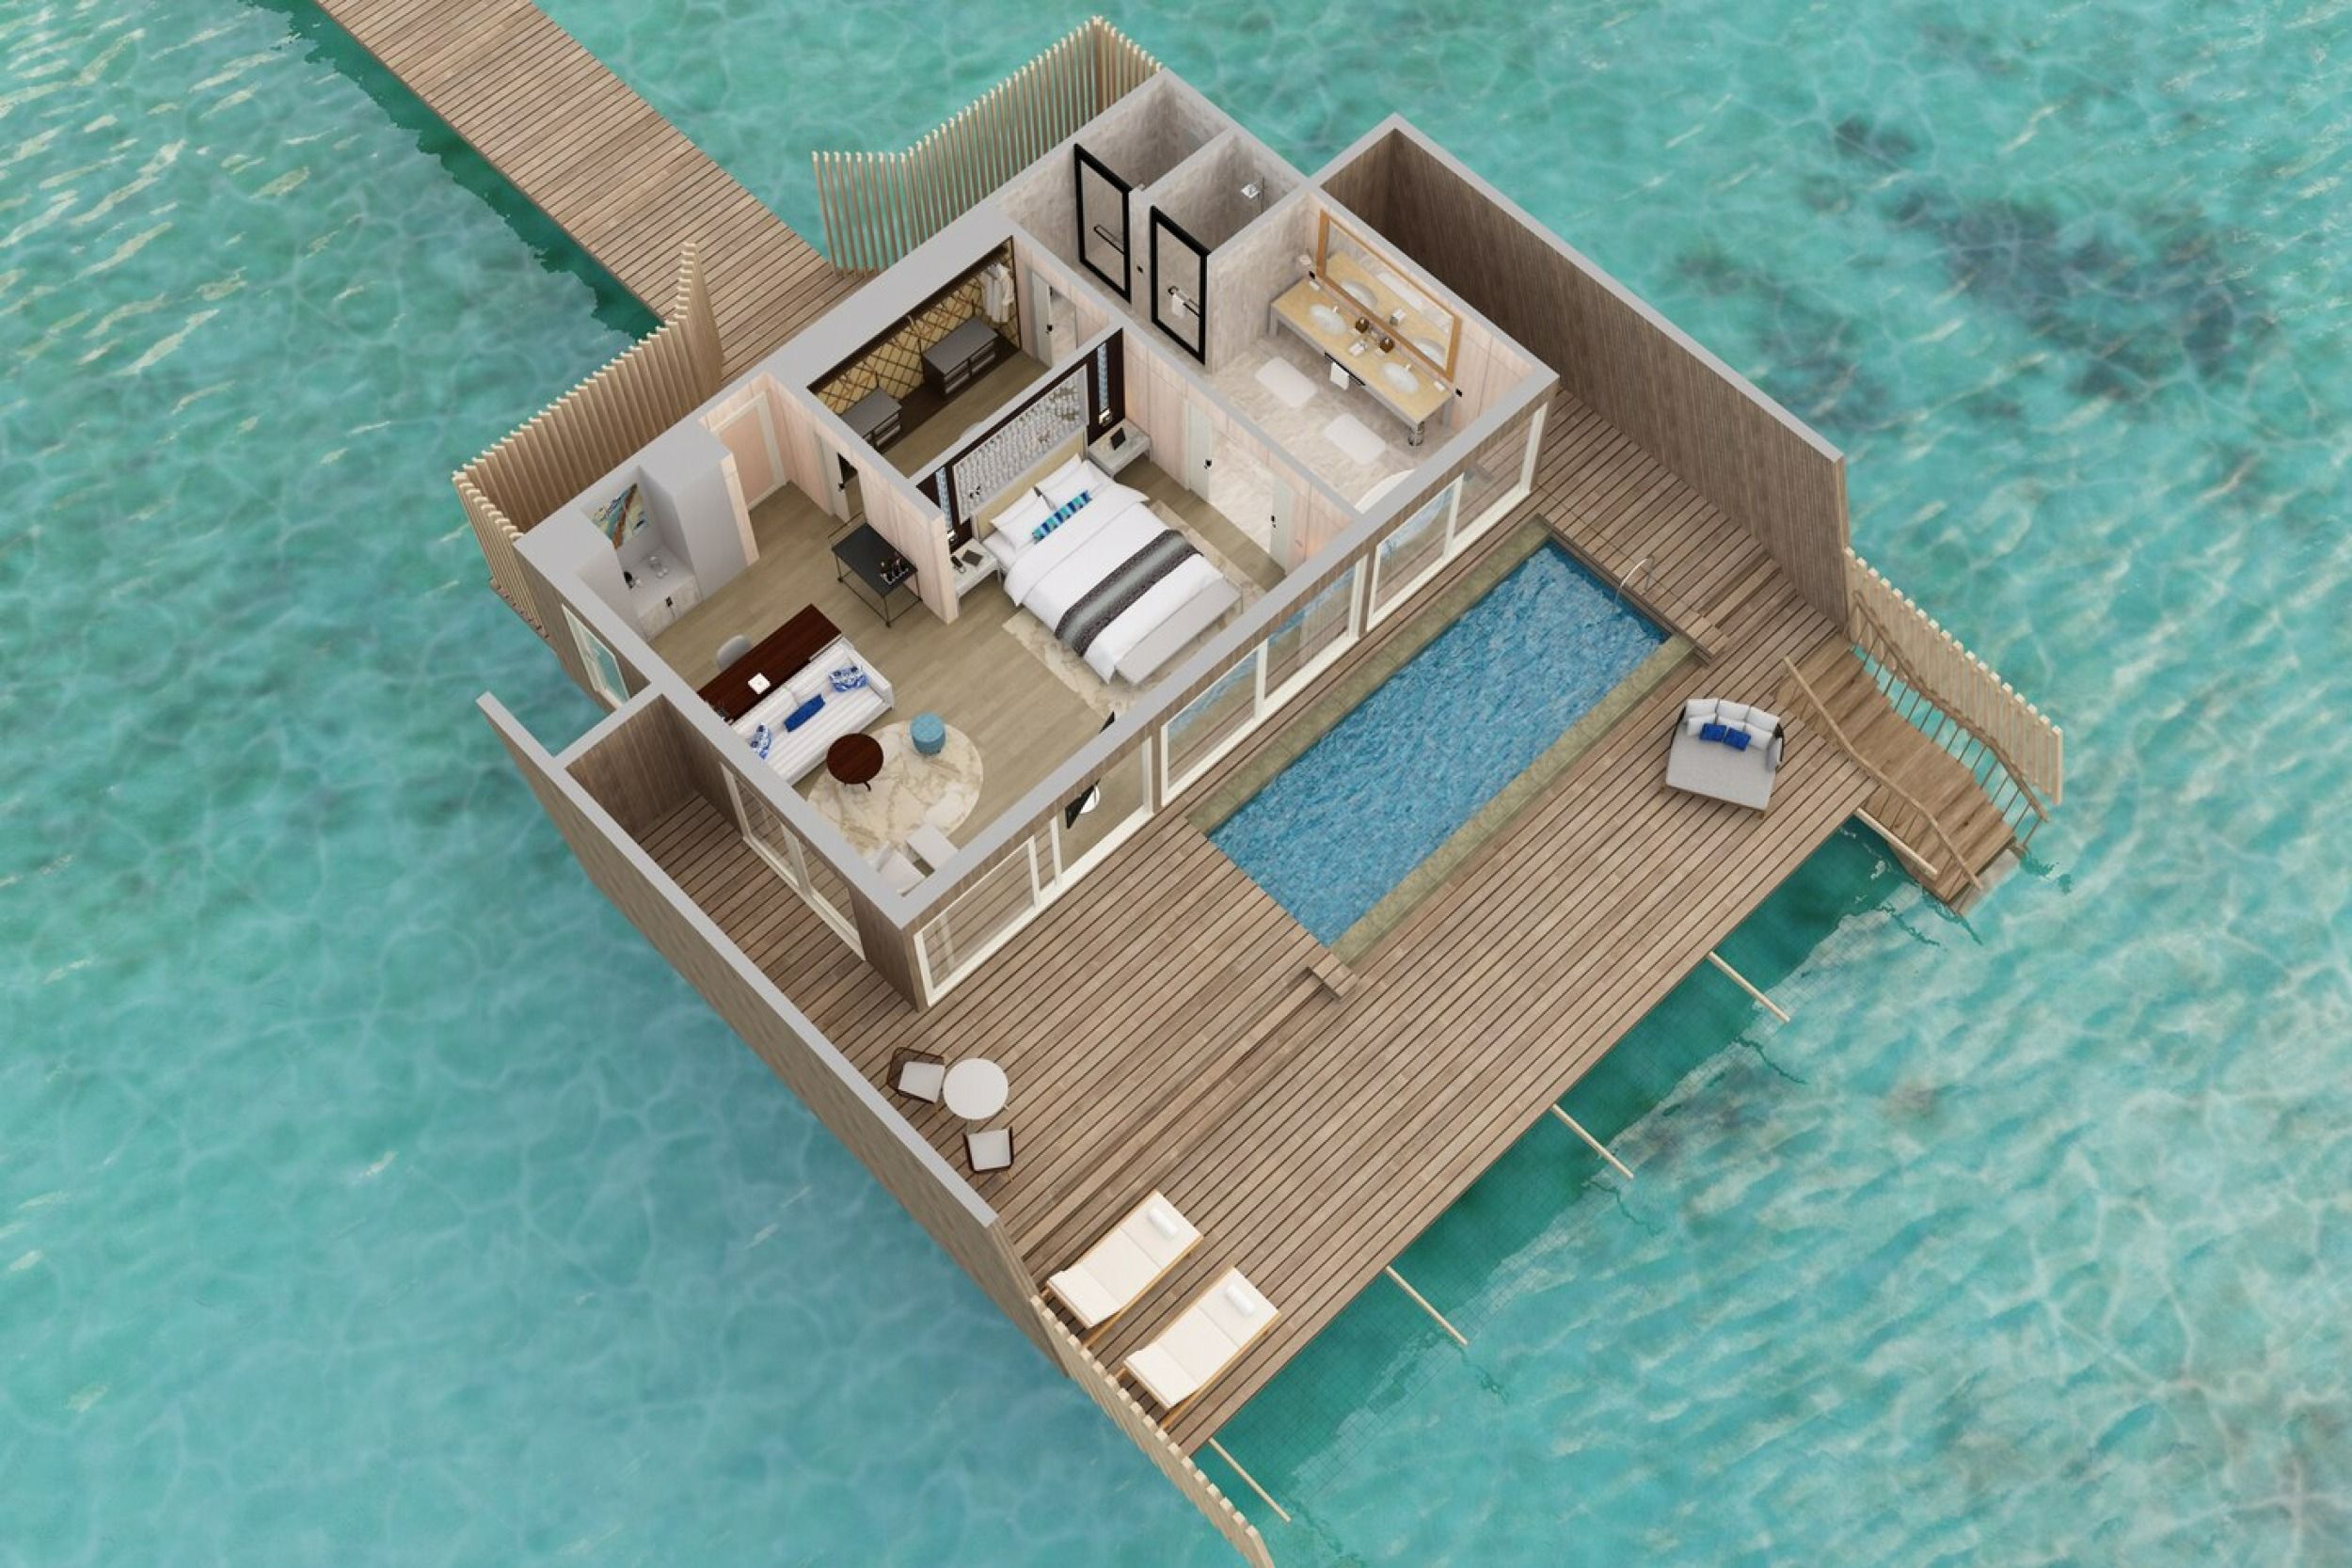 Panoramic Ocean Overwater Villa with Pool
- Floor Plan - The St. Regis Maldives Vommuli Resort